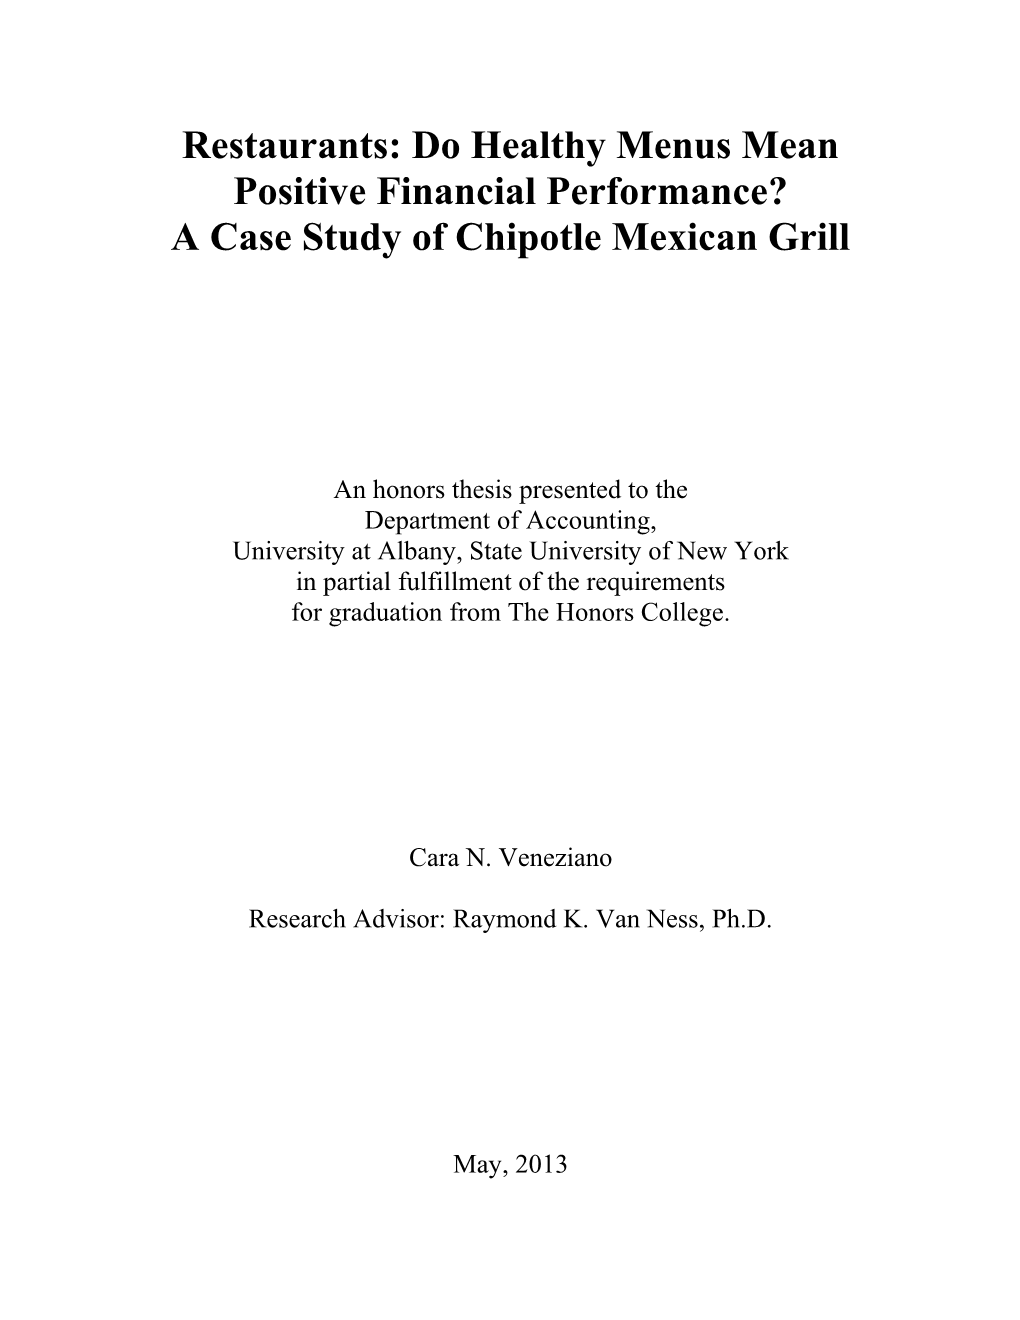 Restaurants: Do Healthy Menus Mean Positive Financial Performance?